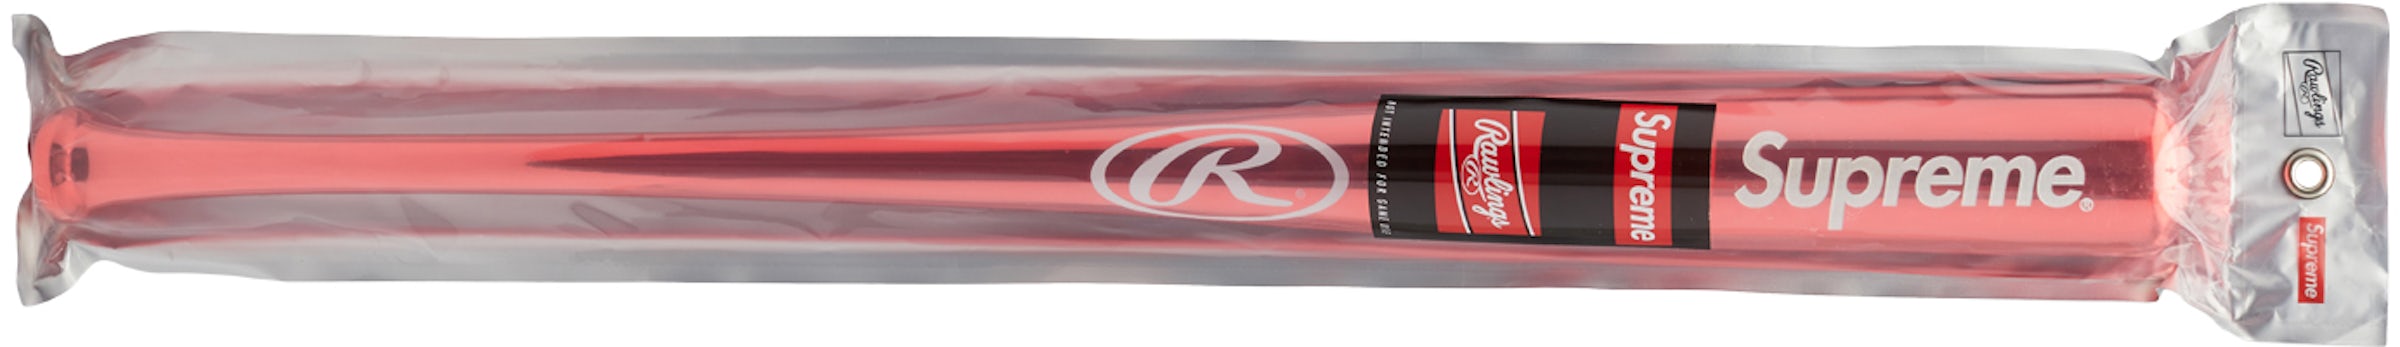 Ready Stock] Supreme Baseball bat baseball bat iron rod weapon legal  self-defense bat colour [Black/White]